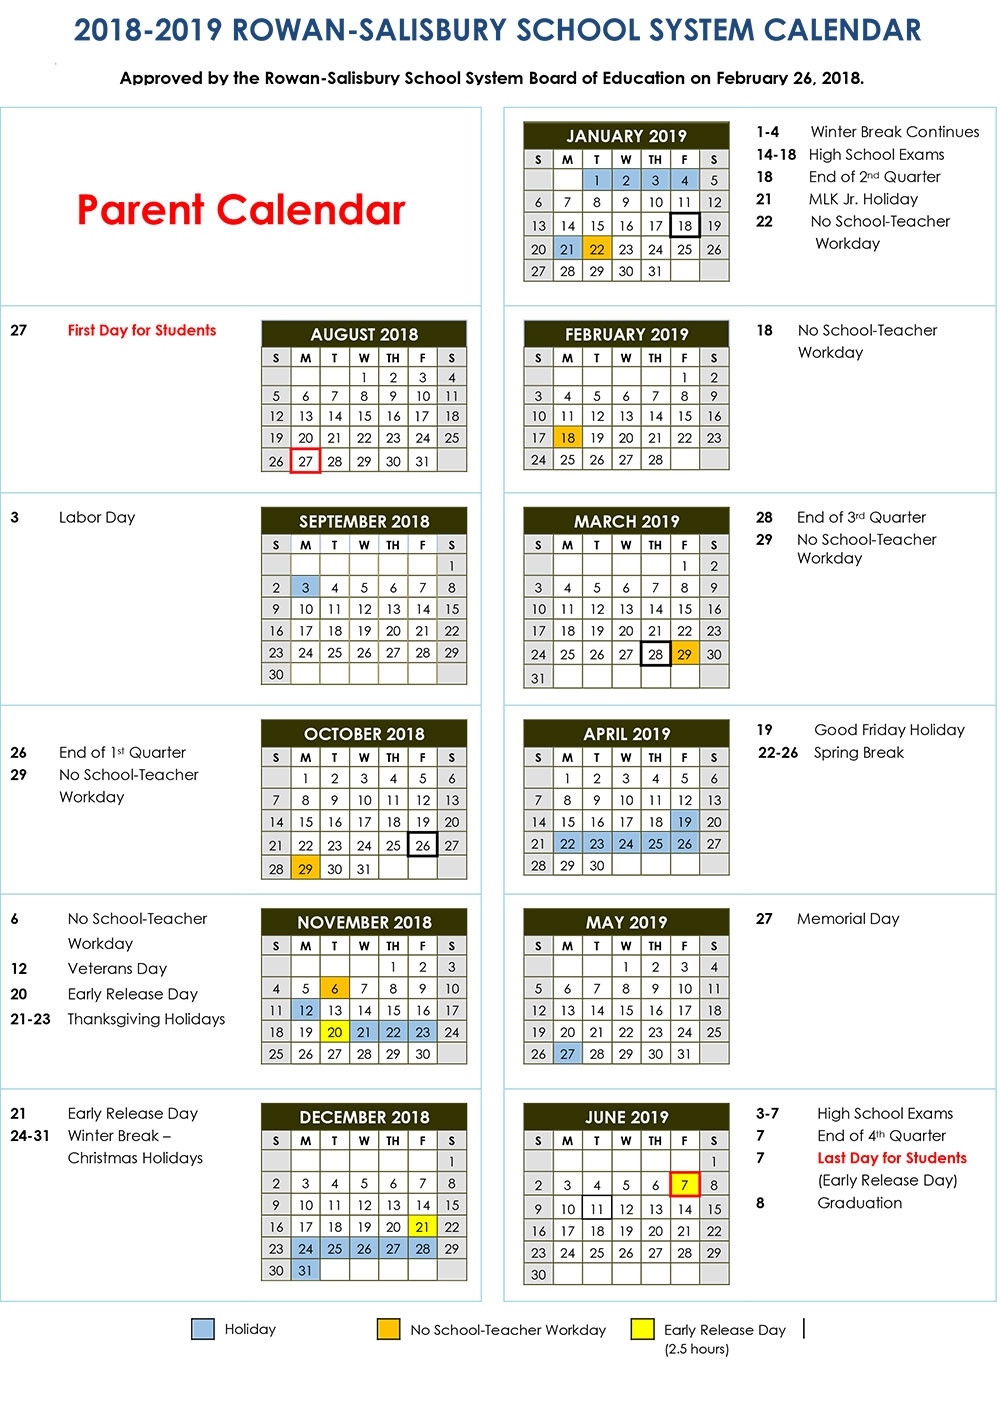 2018-2019 Calendars | District News Dashing Calendar School Year China